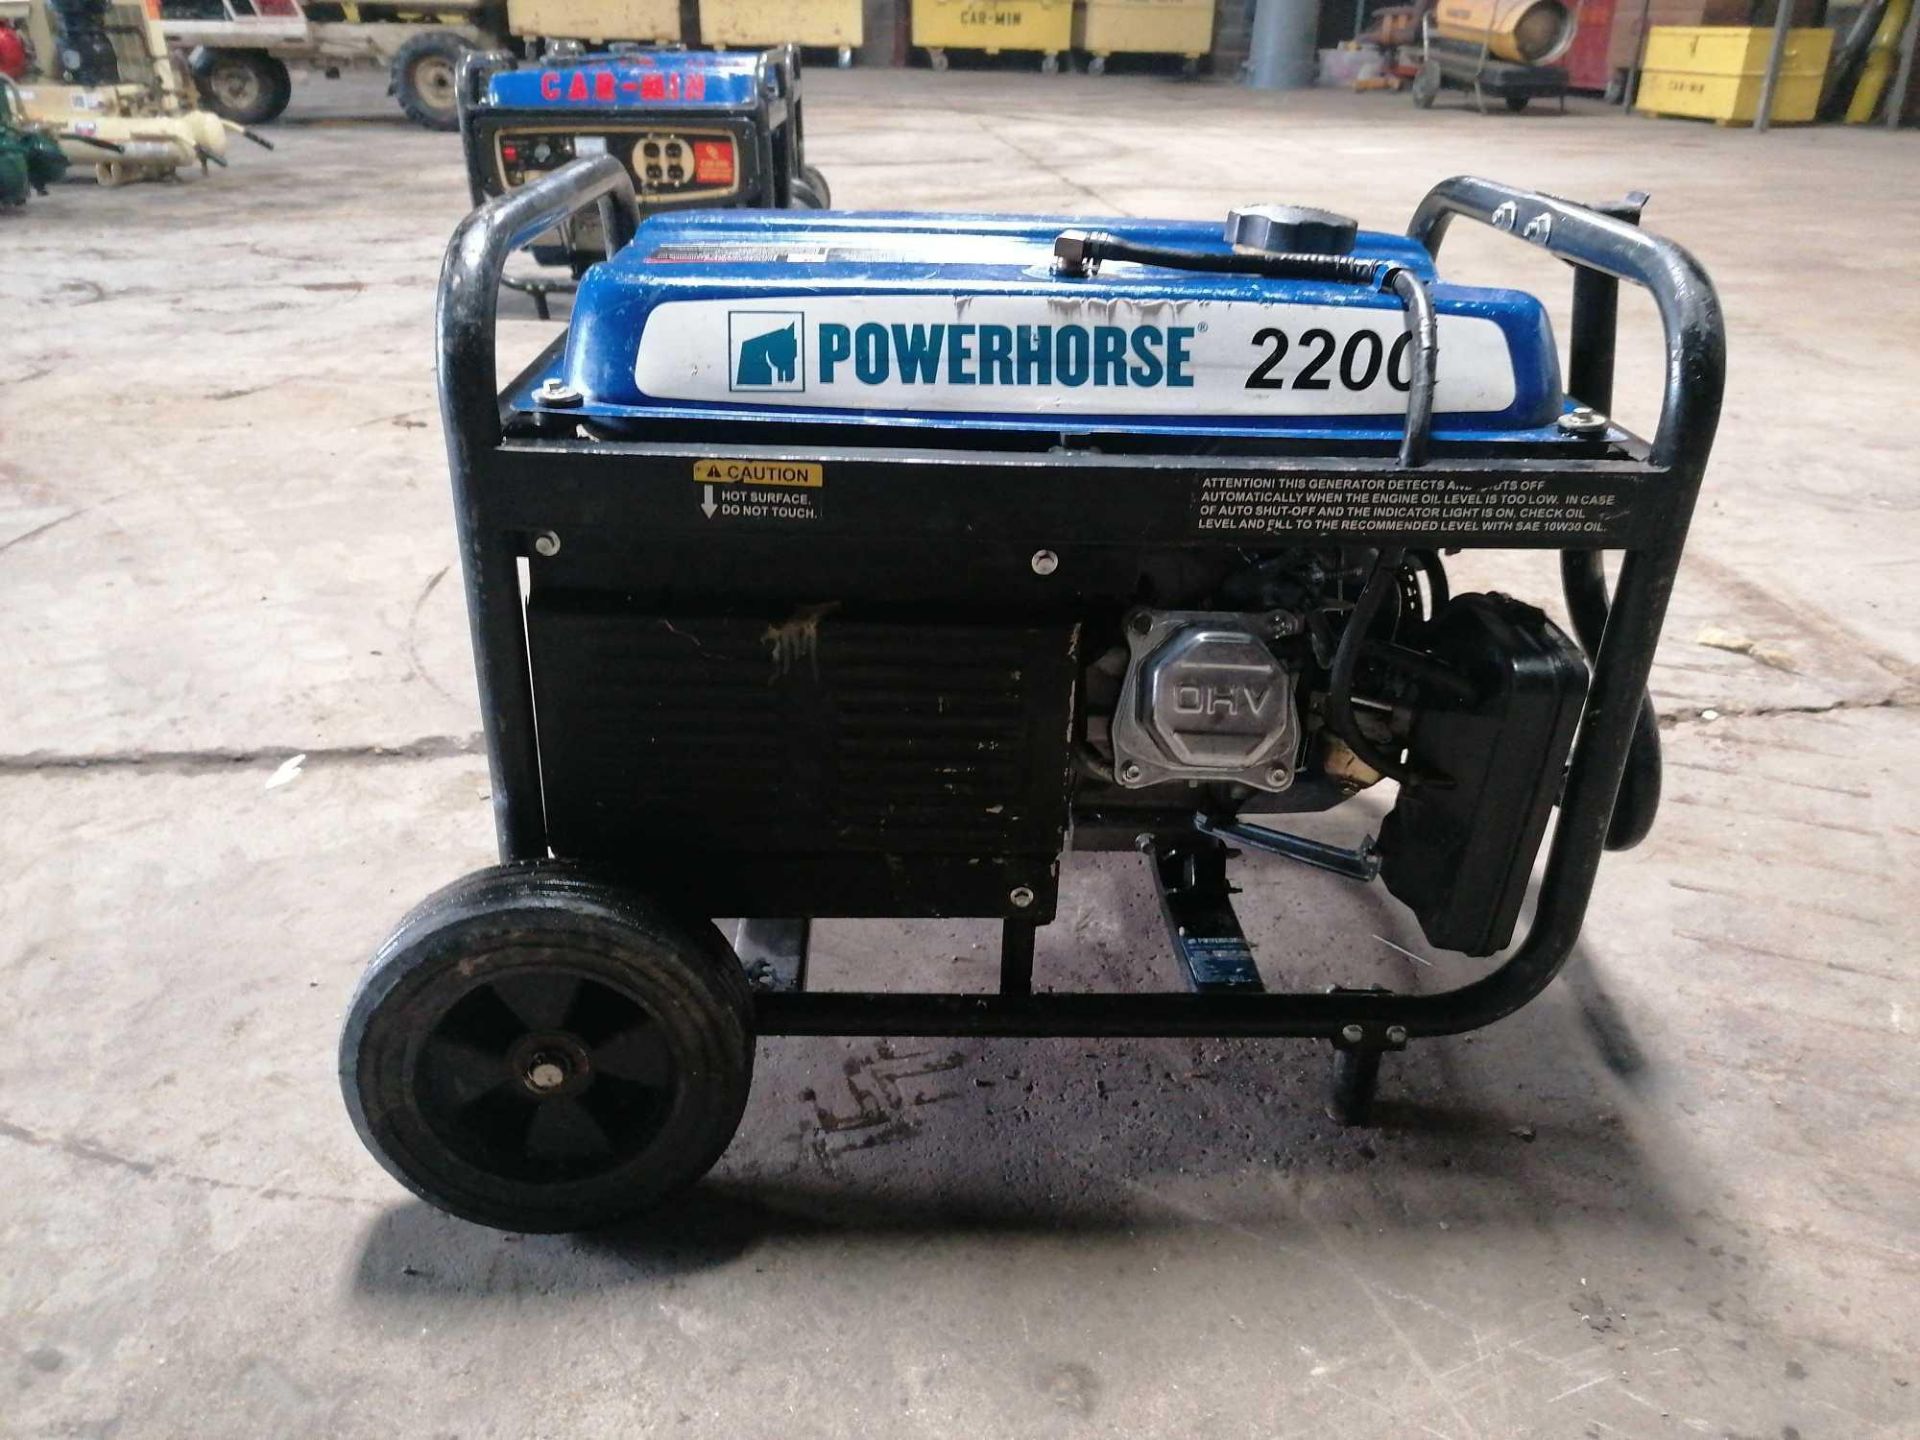 Powerhorse 2200 Electric Generator - Image 2 of 4